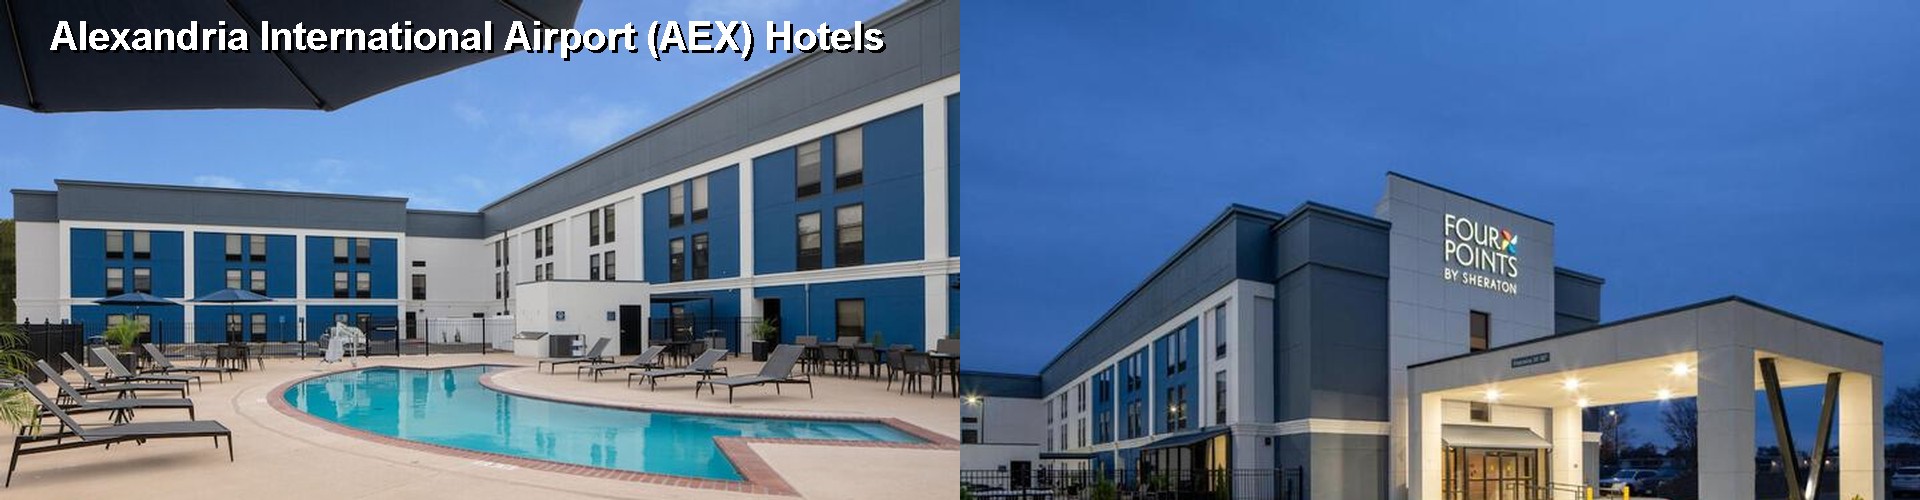 5 Best Hotels near Alexandria International Airport (AEX)